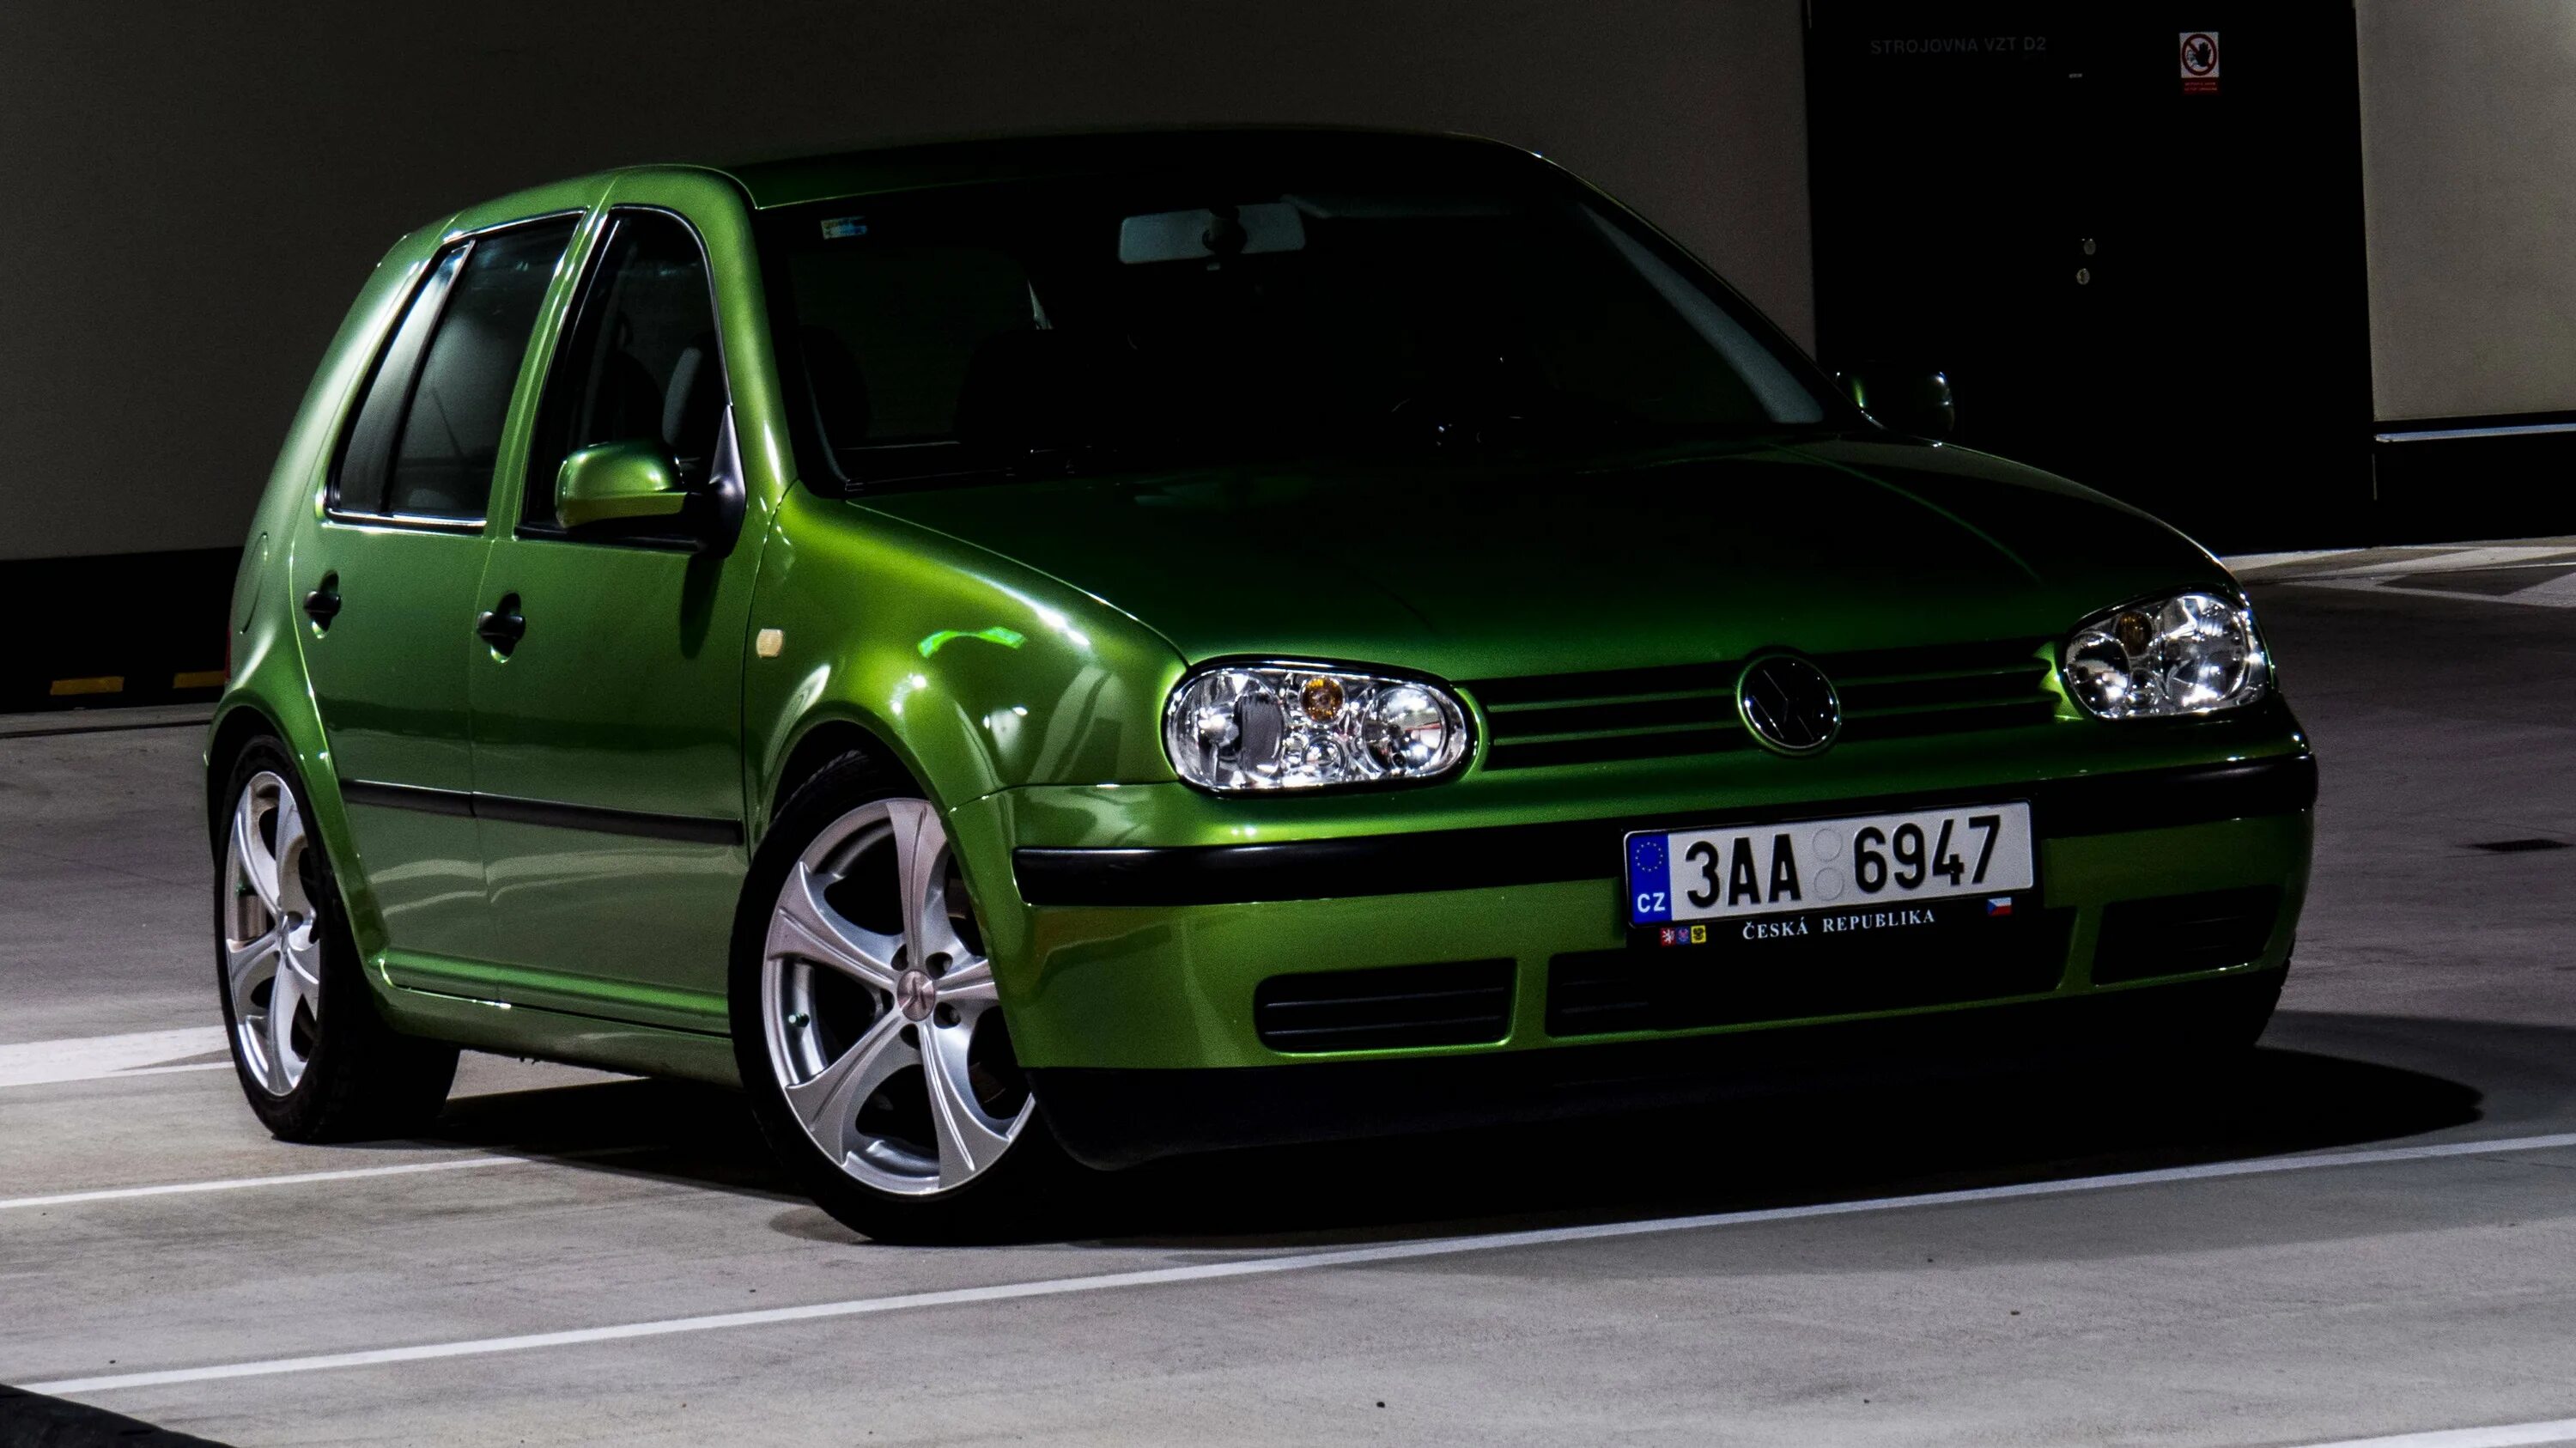 VW Golf 4 Green. Volkswagen Golf 4 зеленый. Volkswagen Golf 4 темно-зеленый. Волксвген гольф 4 зелёный.